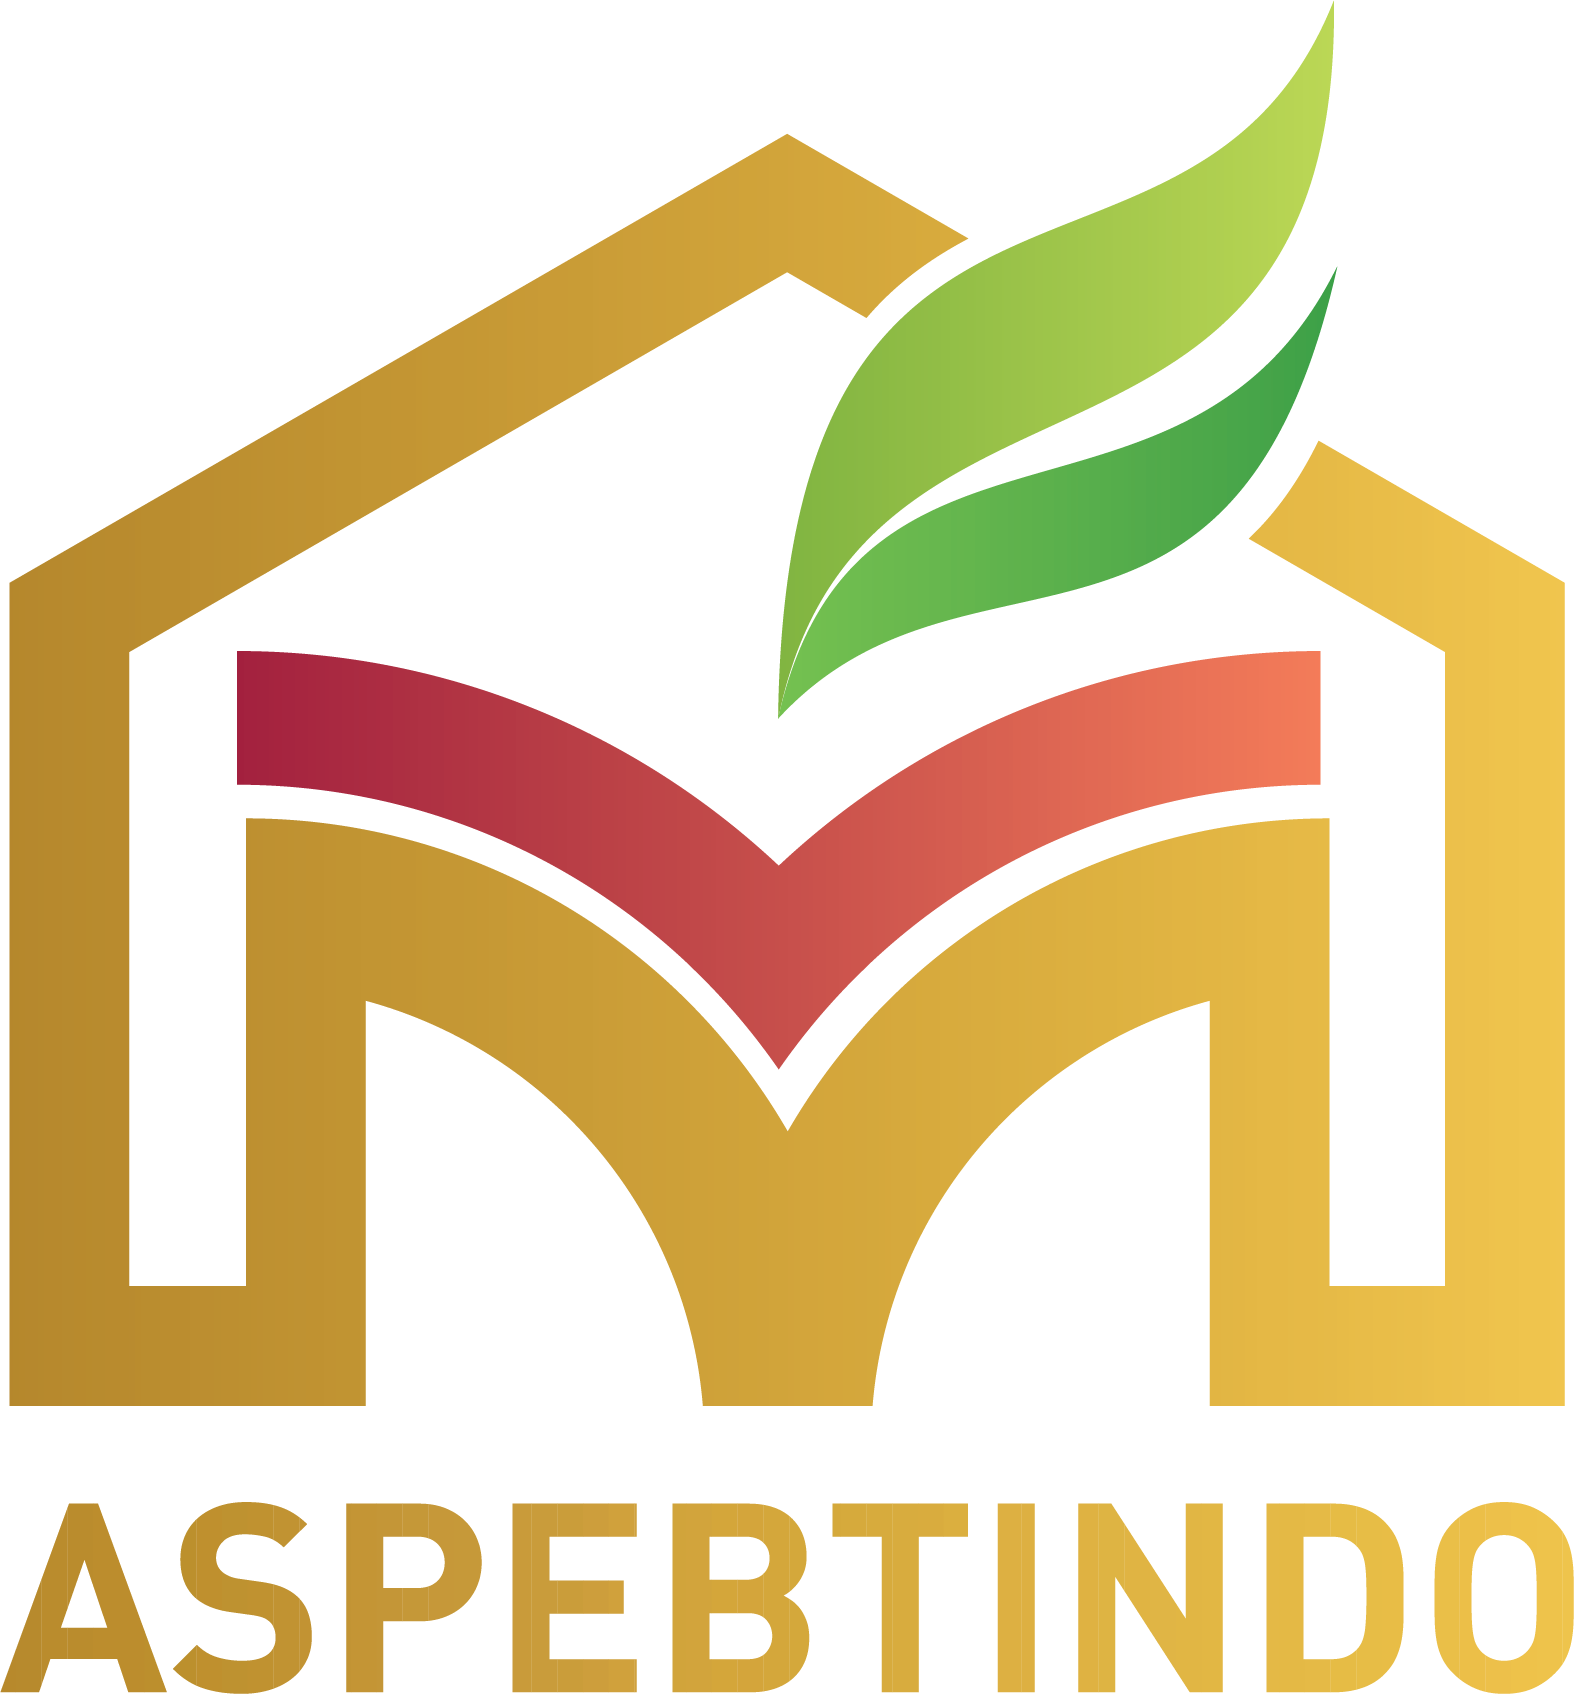 Aspebtindo Logo Image